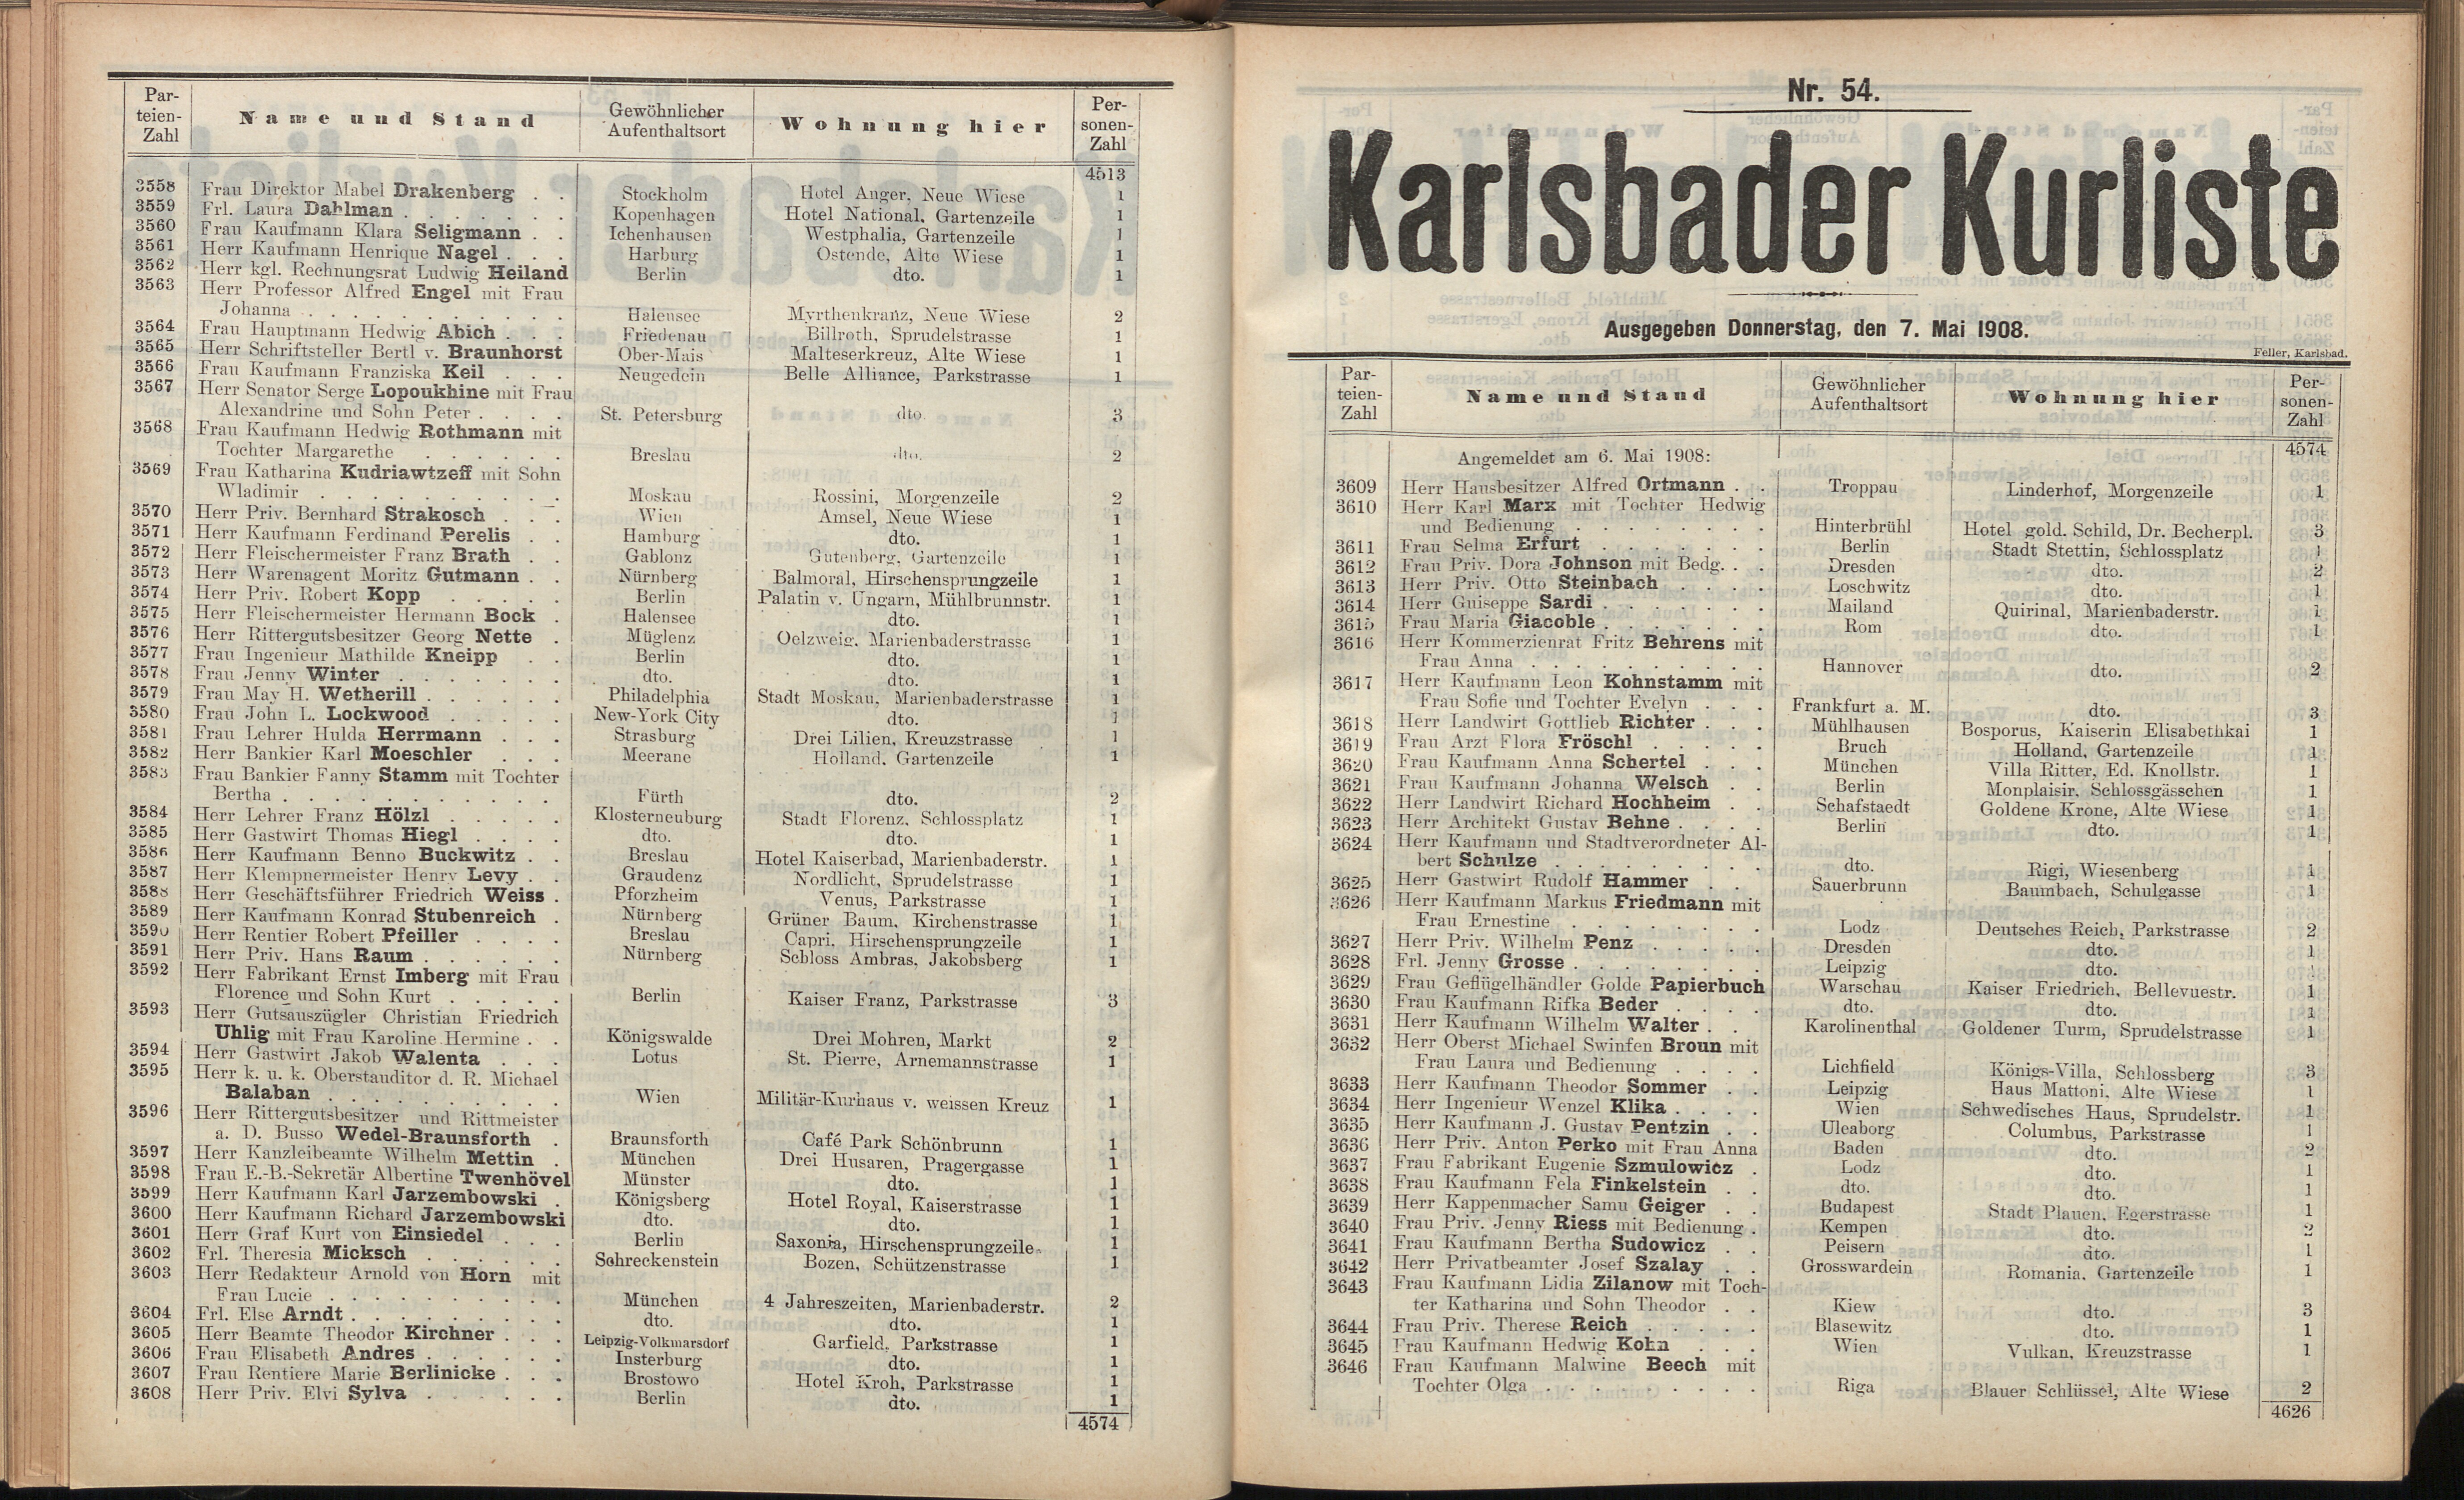 166. soap-kv_knihovna_karlsbader-kurliste-1908_1670